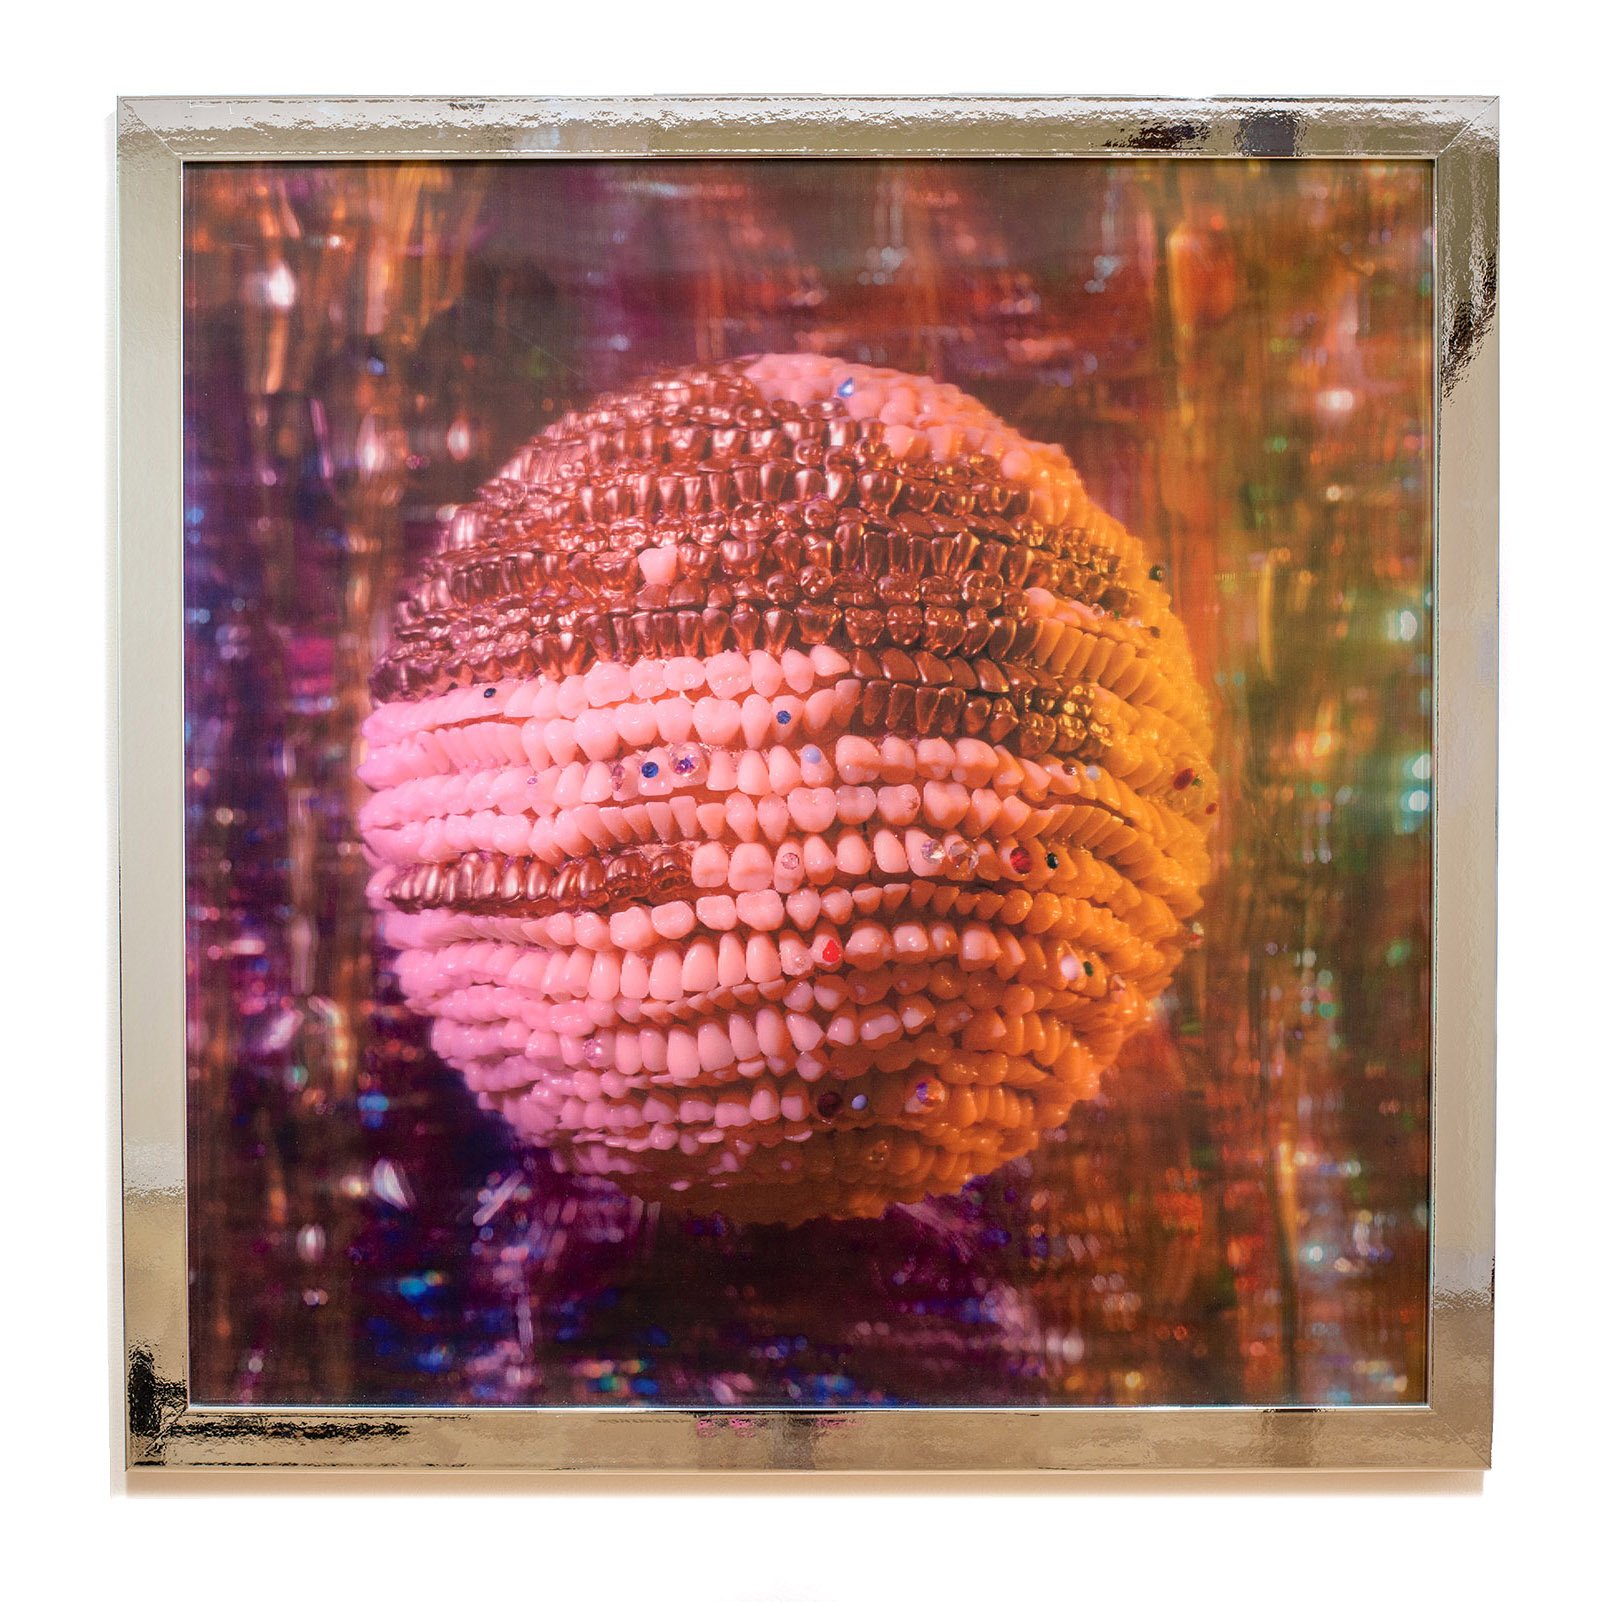  “Orb II” shown here as a framed lenticular print 